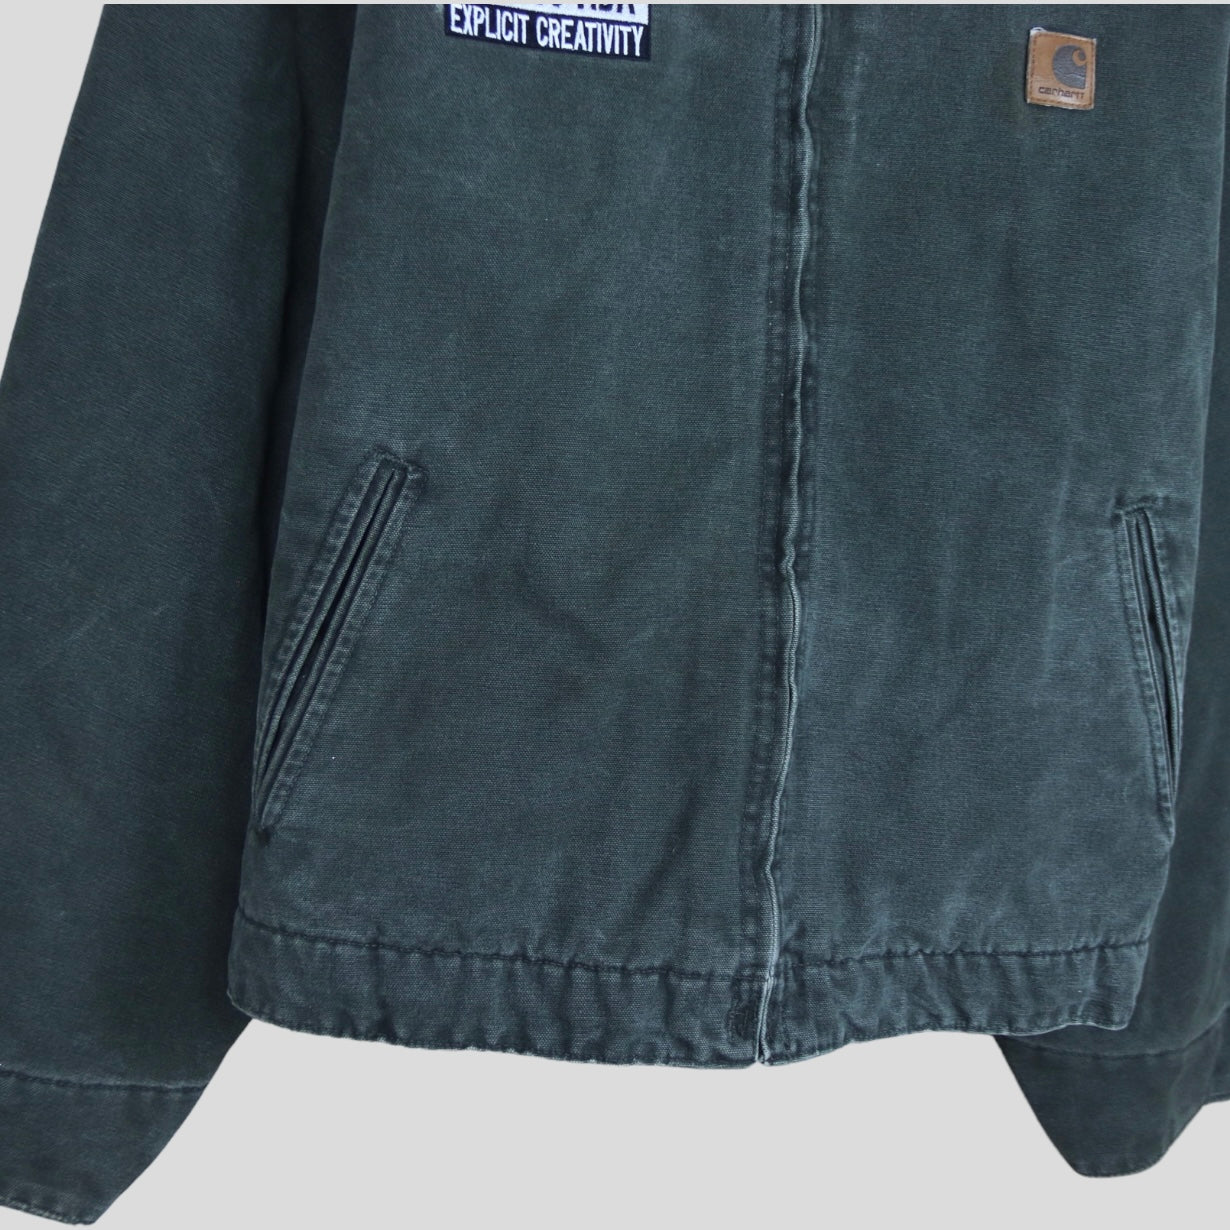 Vintage Carhartt Detroit Blanket Lined Work Jacket Wip Black Made in Mexico